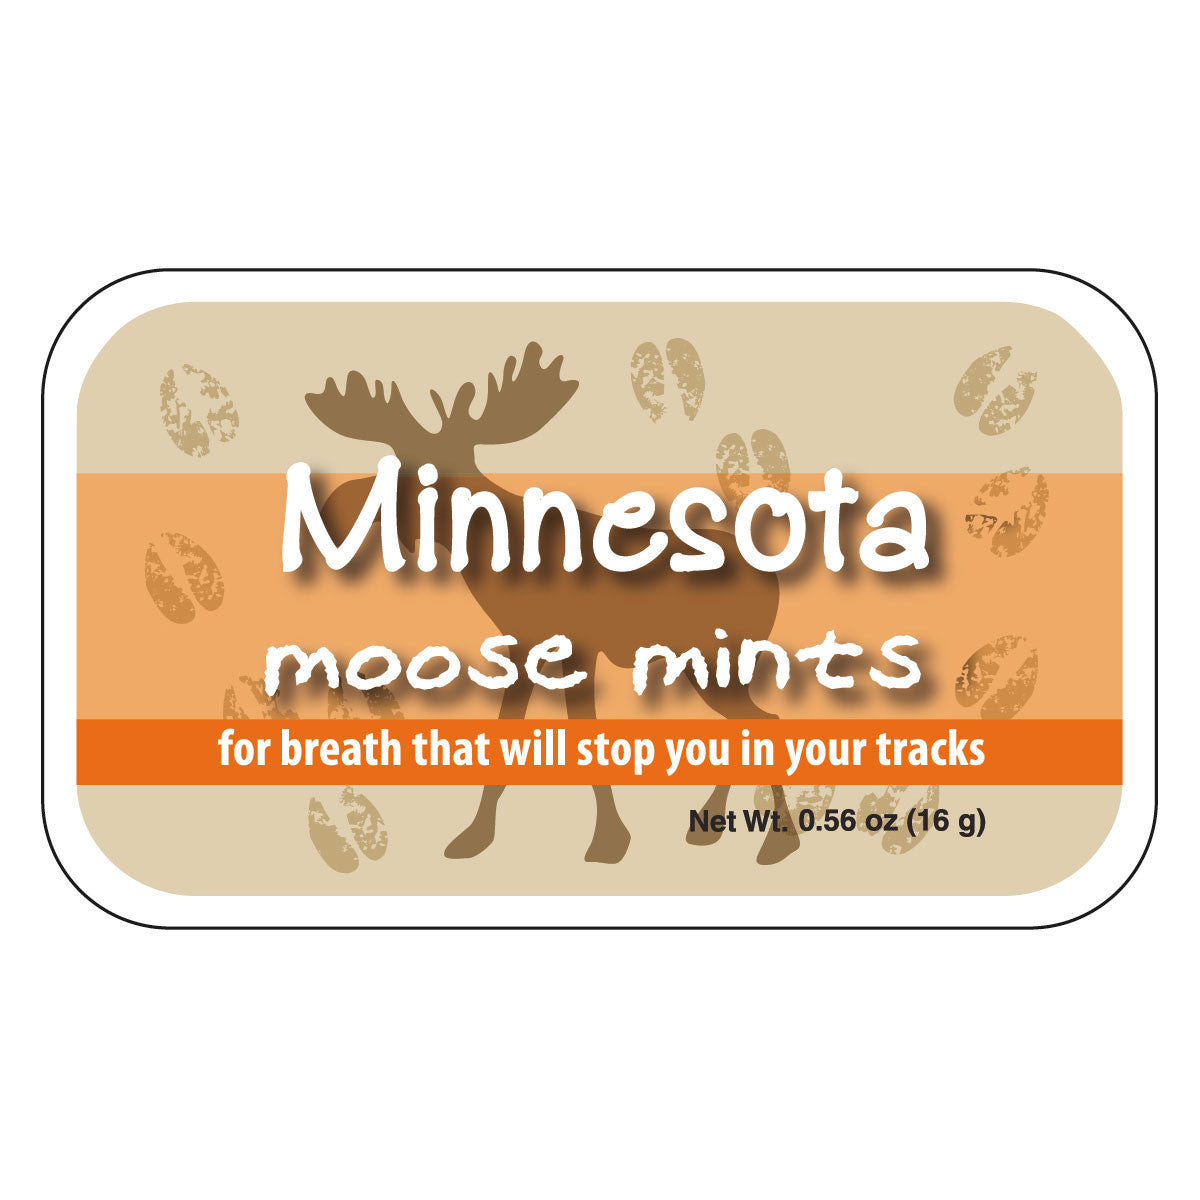 Moose Tracks Minnesota - 0040S